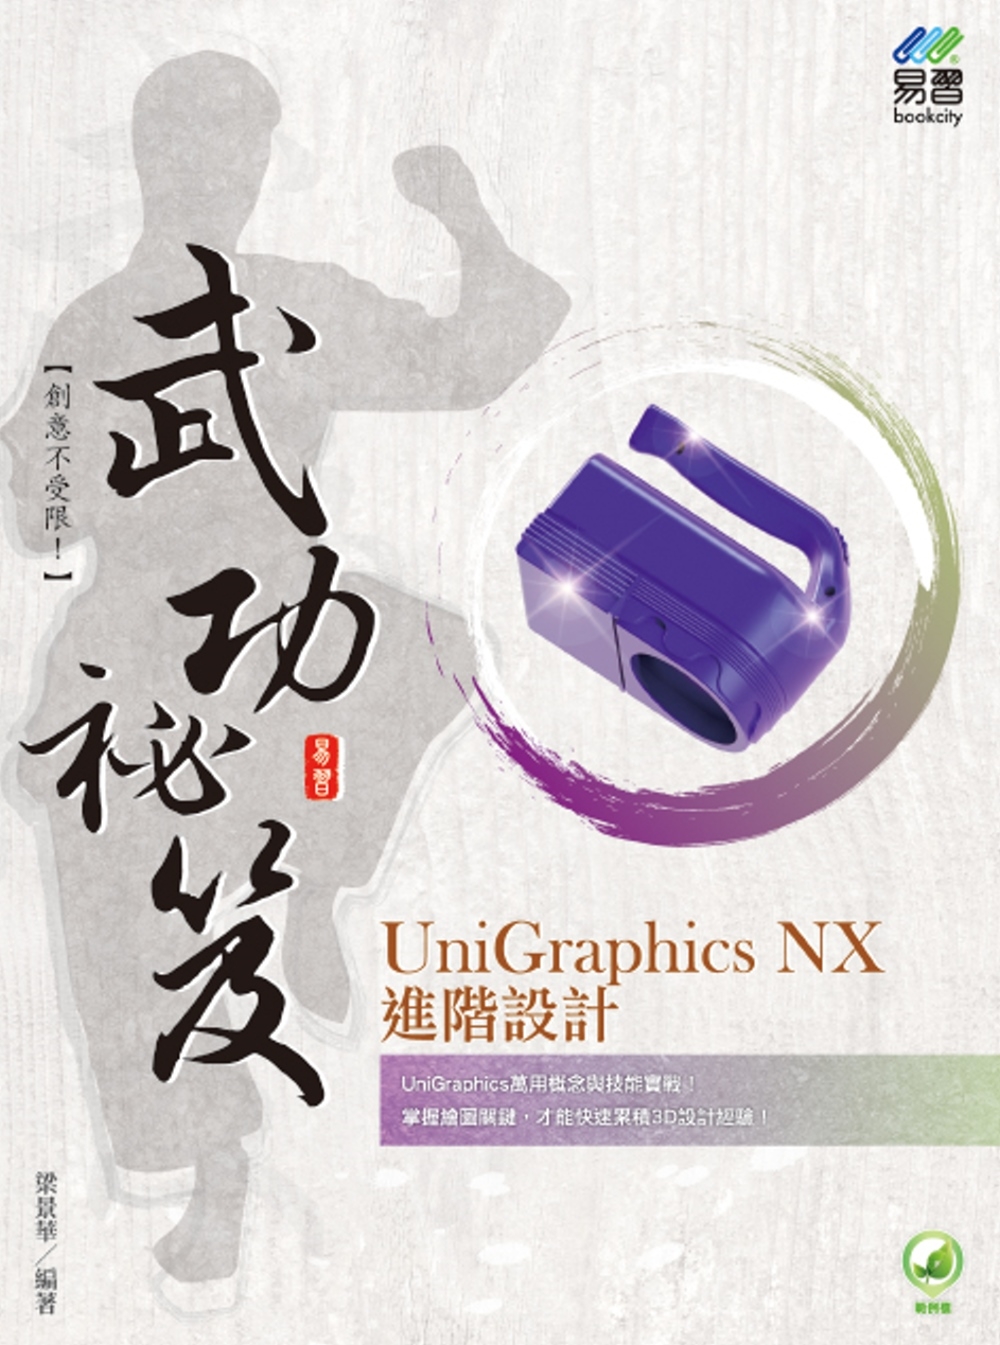 UniGraphics NX 進階設計 武功祕笈